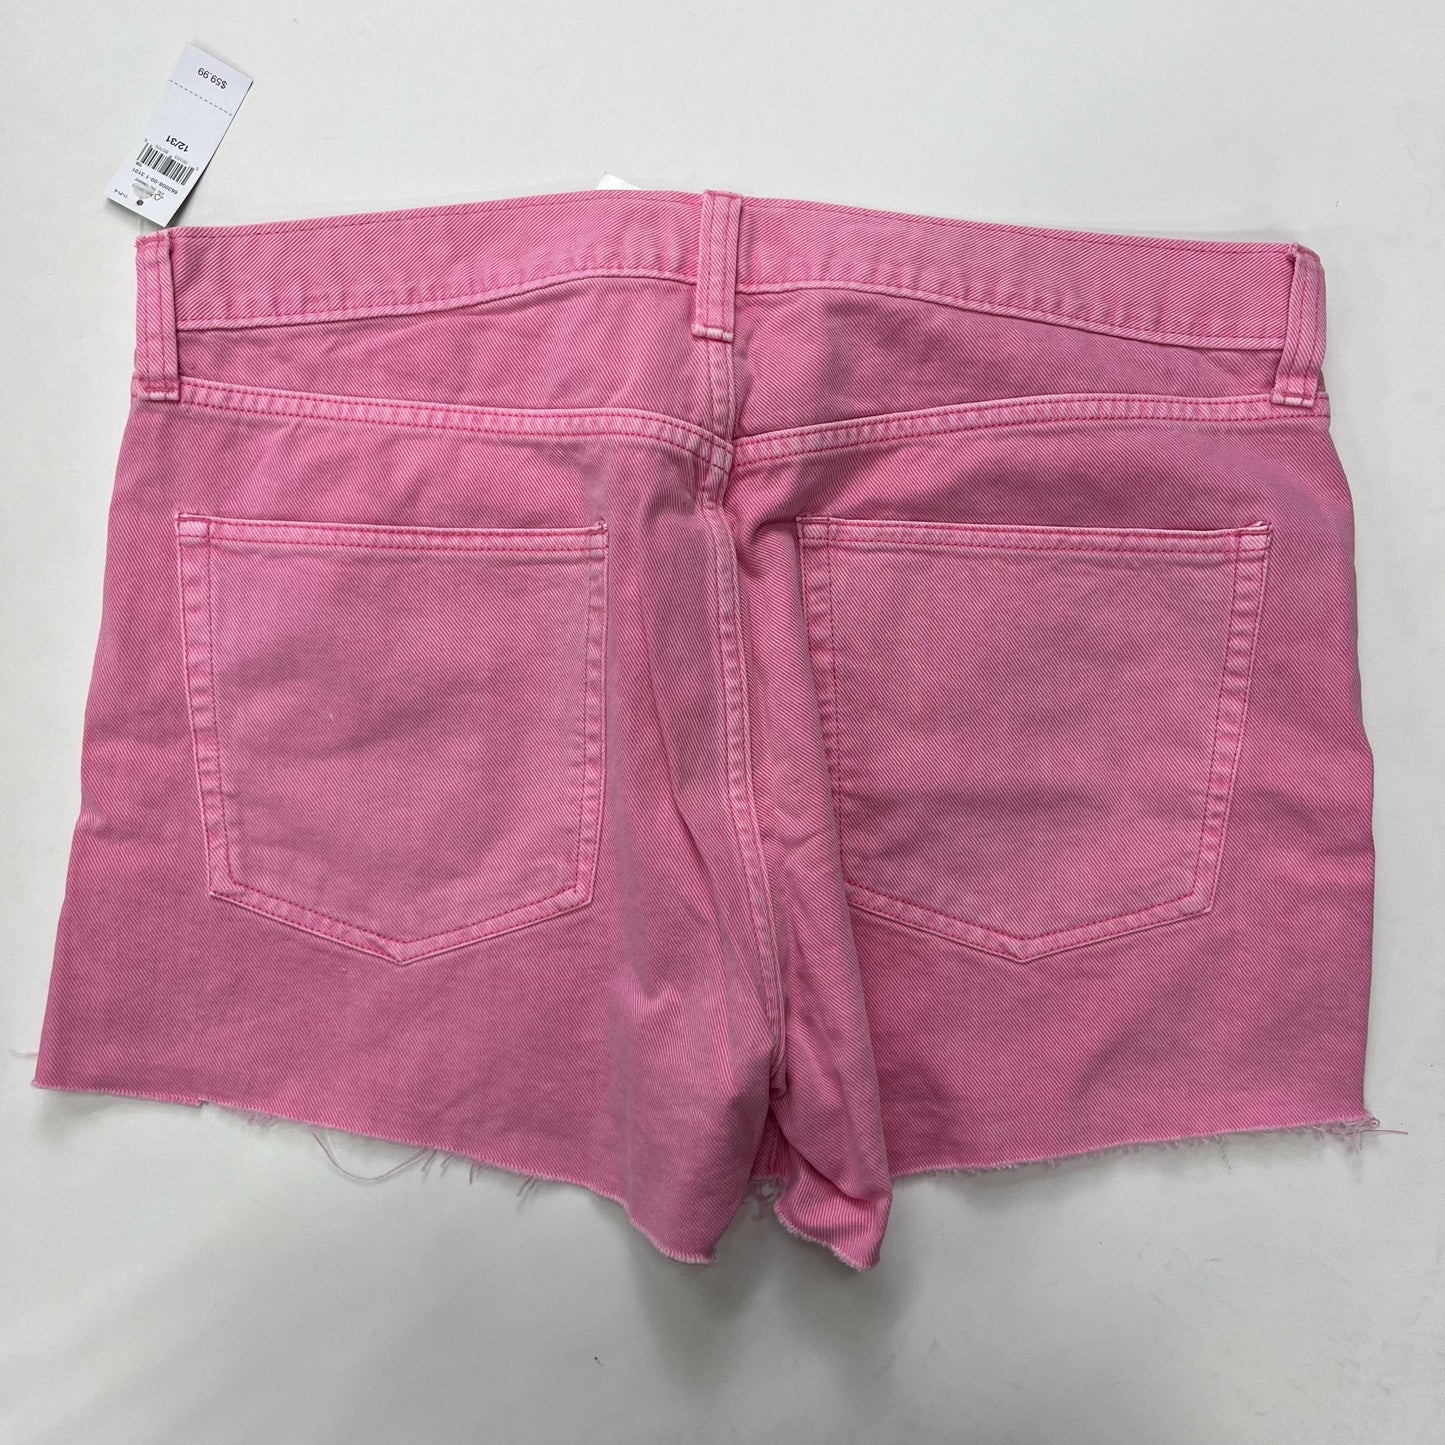 Pink Shorts Gap, Size 12